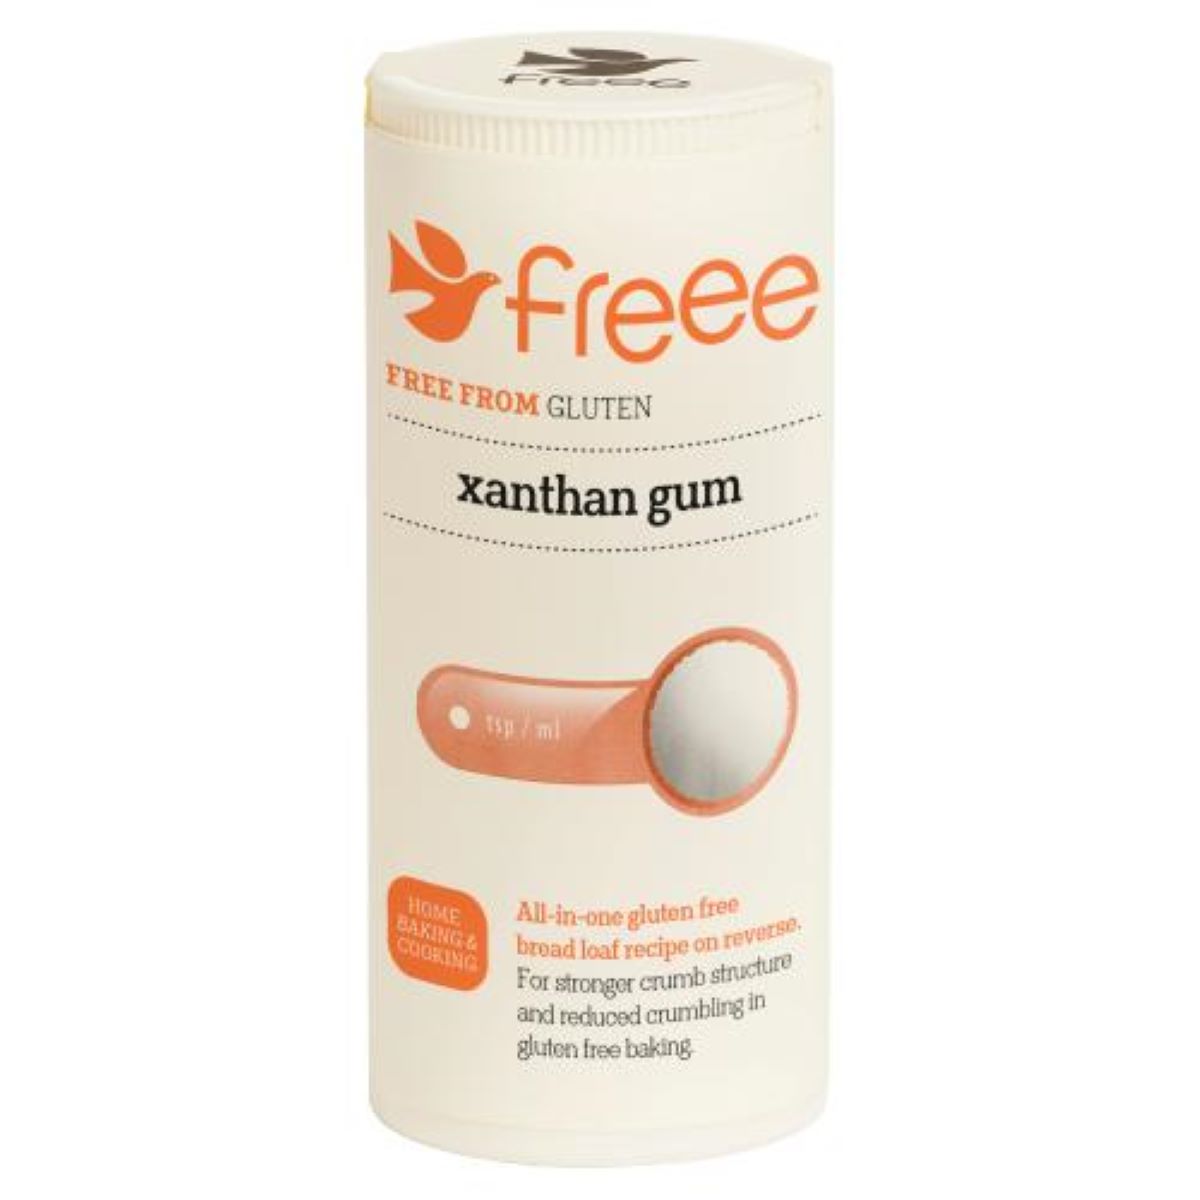 Freee Gluten Free Xanthan Gum 100g